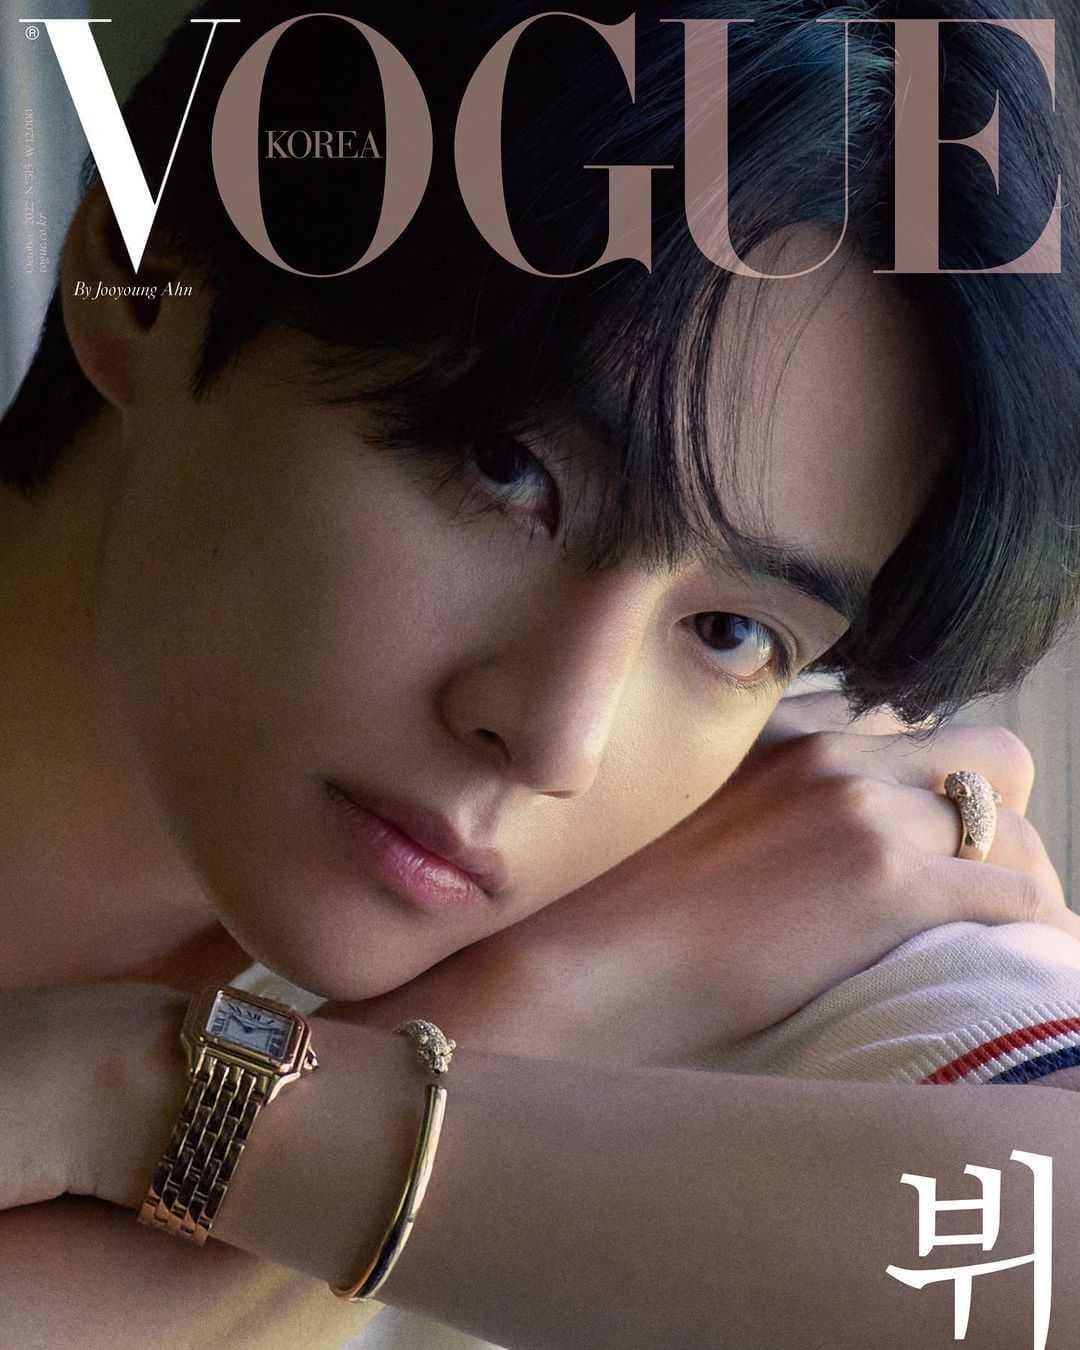 BTS] GQ Vogue Korea Magazine JIMIN / V Taehyung COVER – CoreToolbox